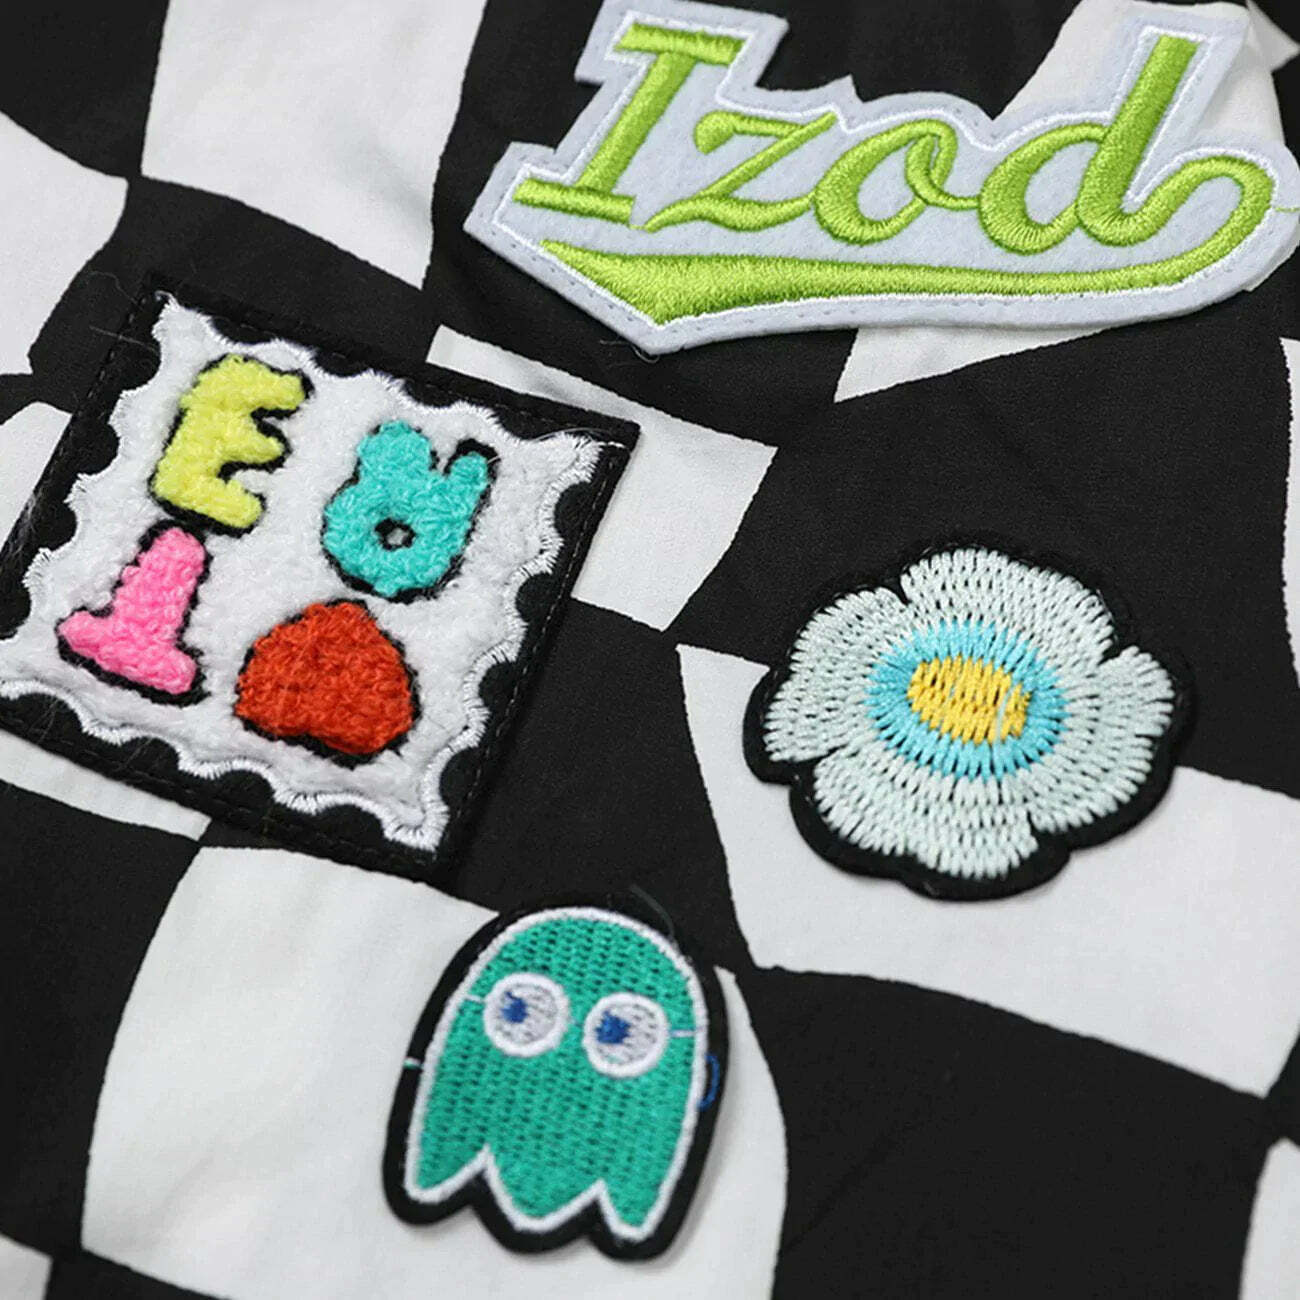 plaid embroidery short sleeve shirt edgy streetwear essential 7316